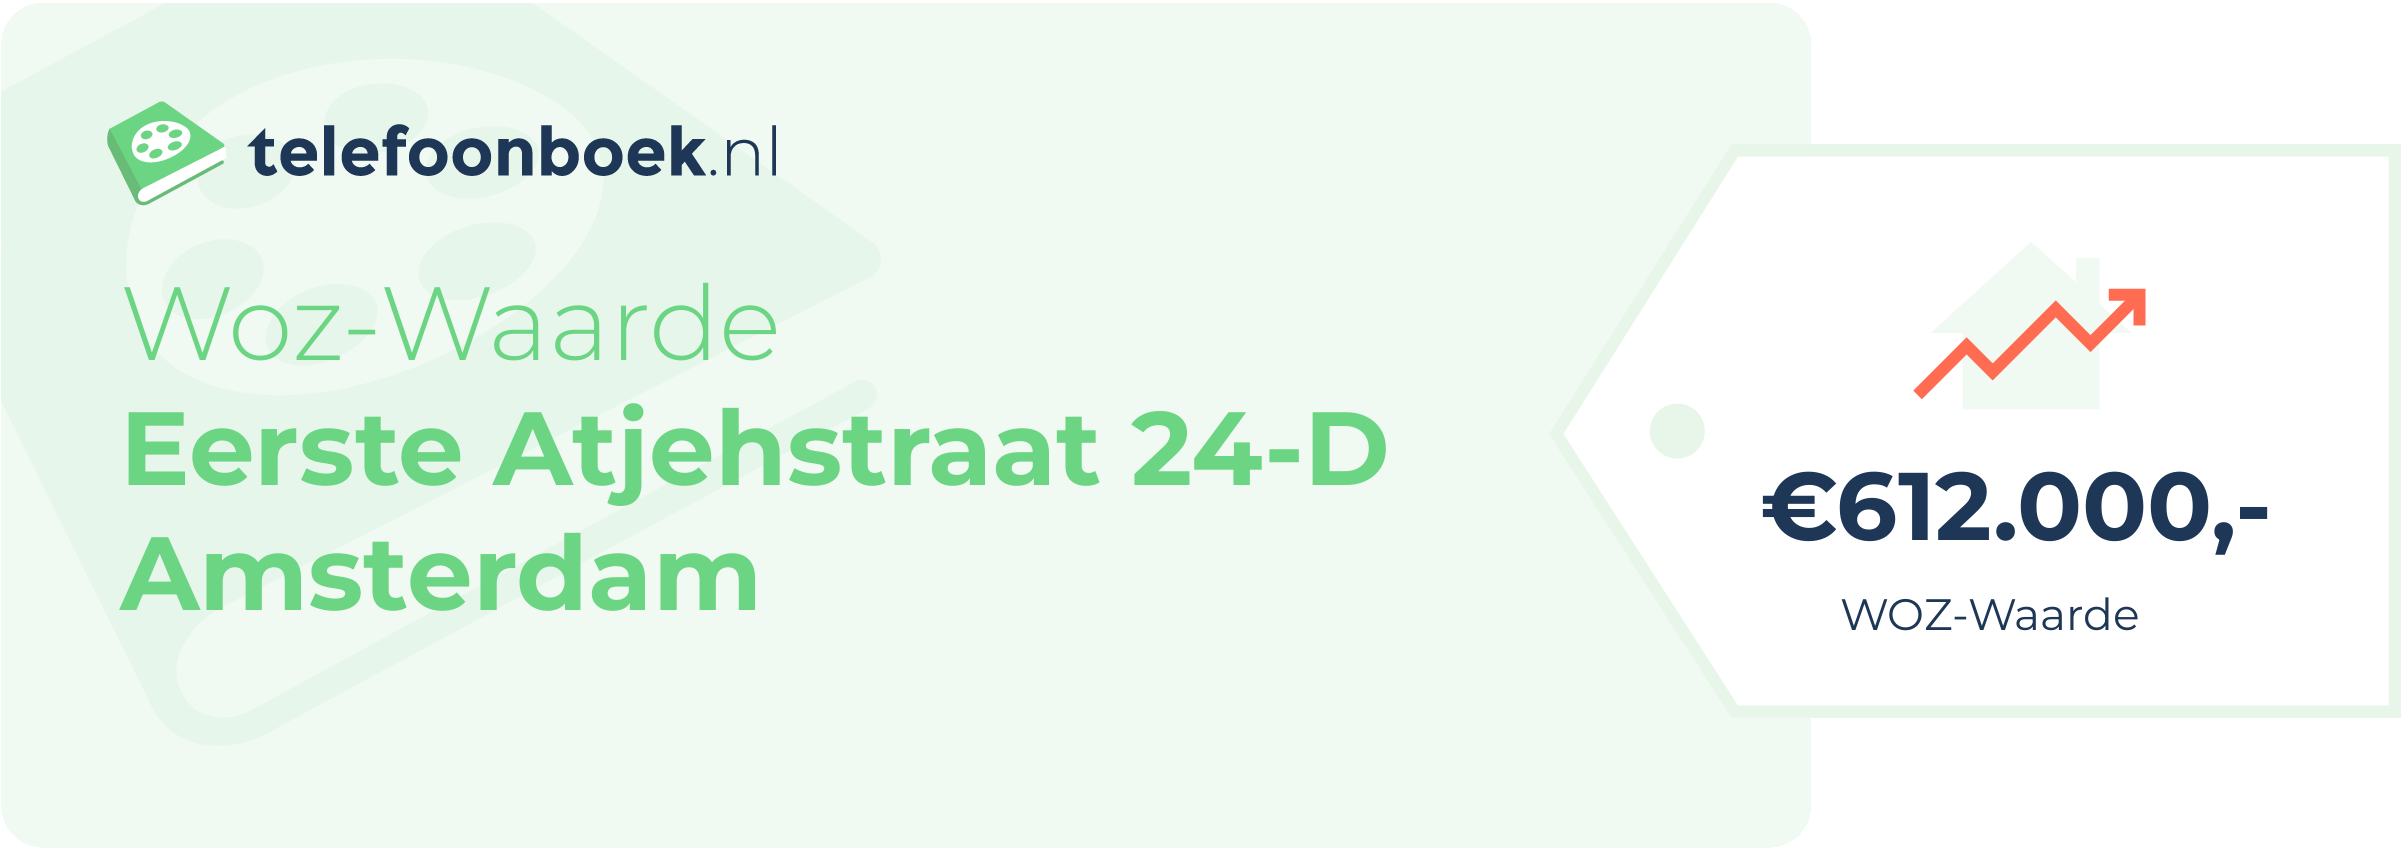 WOZ-waarde Eerste Atjehstraat 24-D Amsterdam